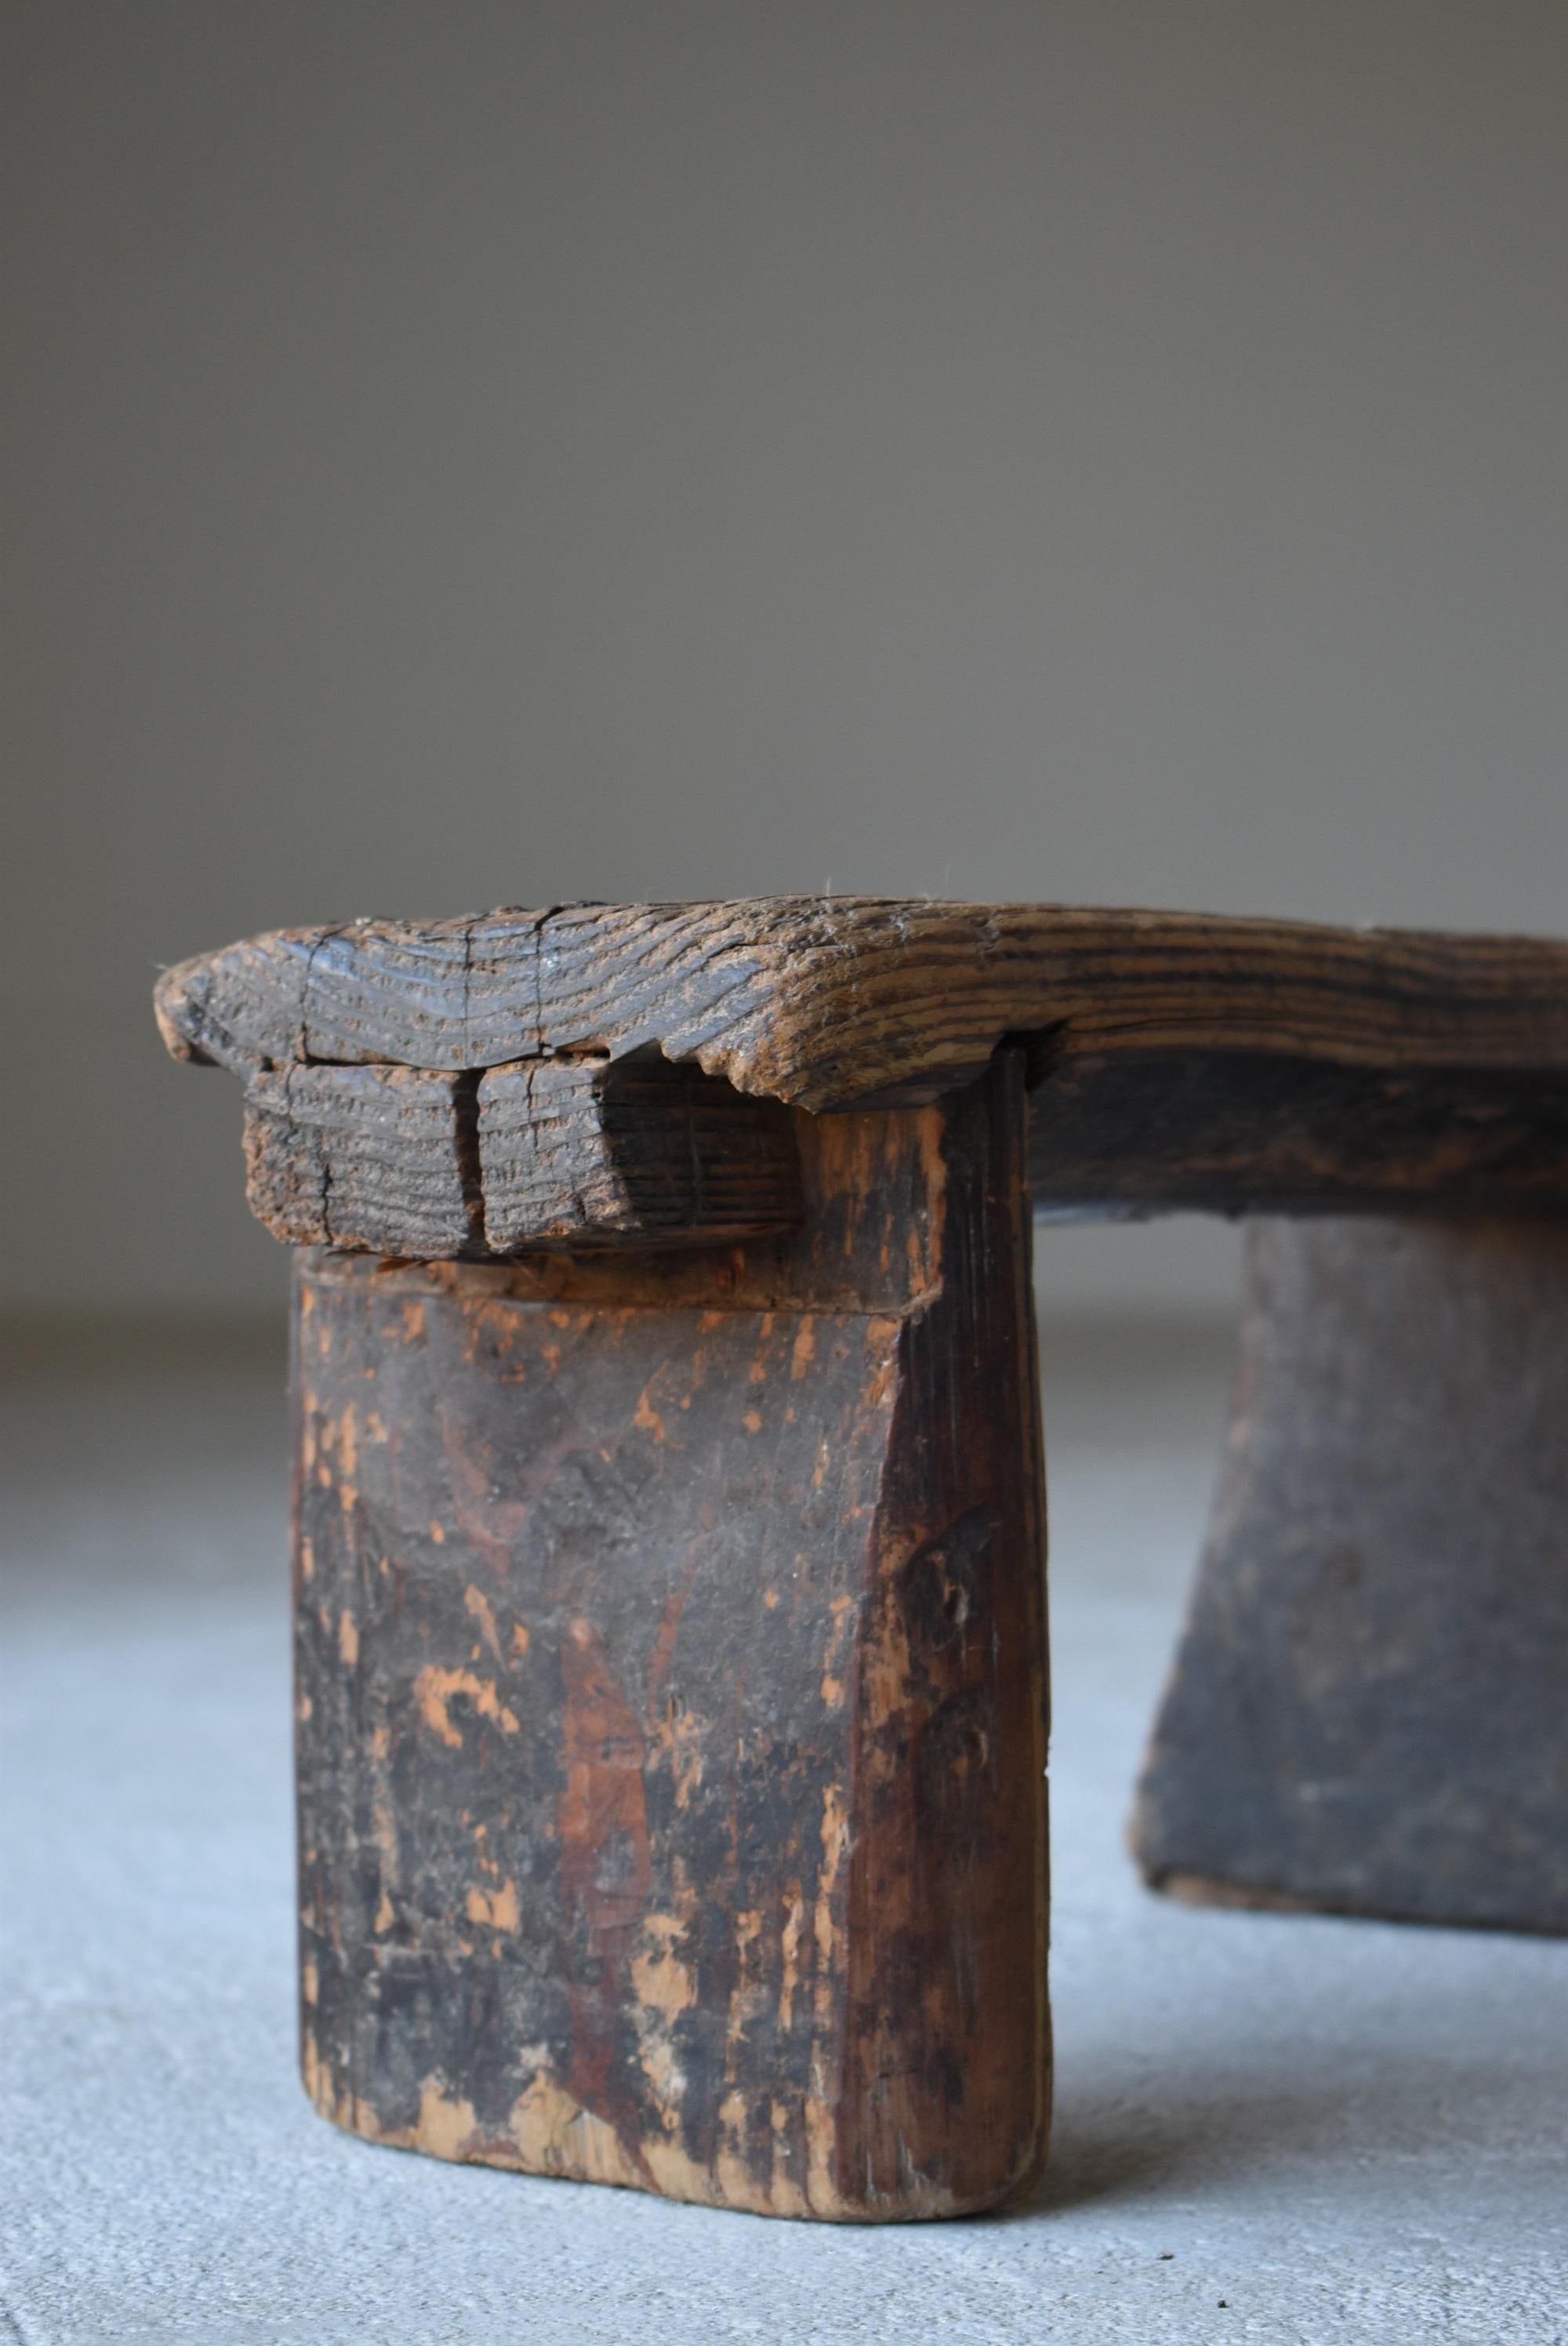 20th Century Japanese Antique Stool 1860s-1900s/Primitive Chair Stand Wabisabi mingei